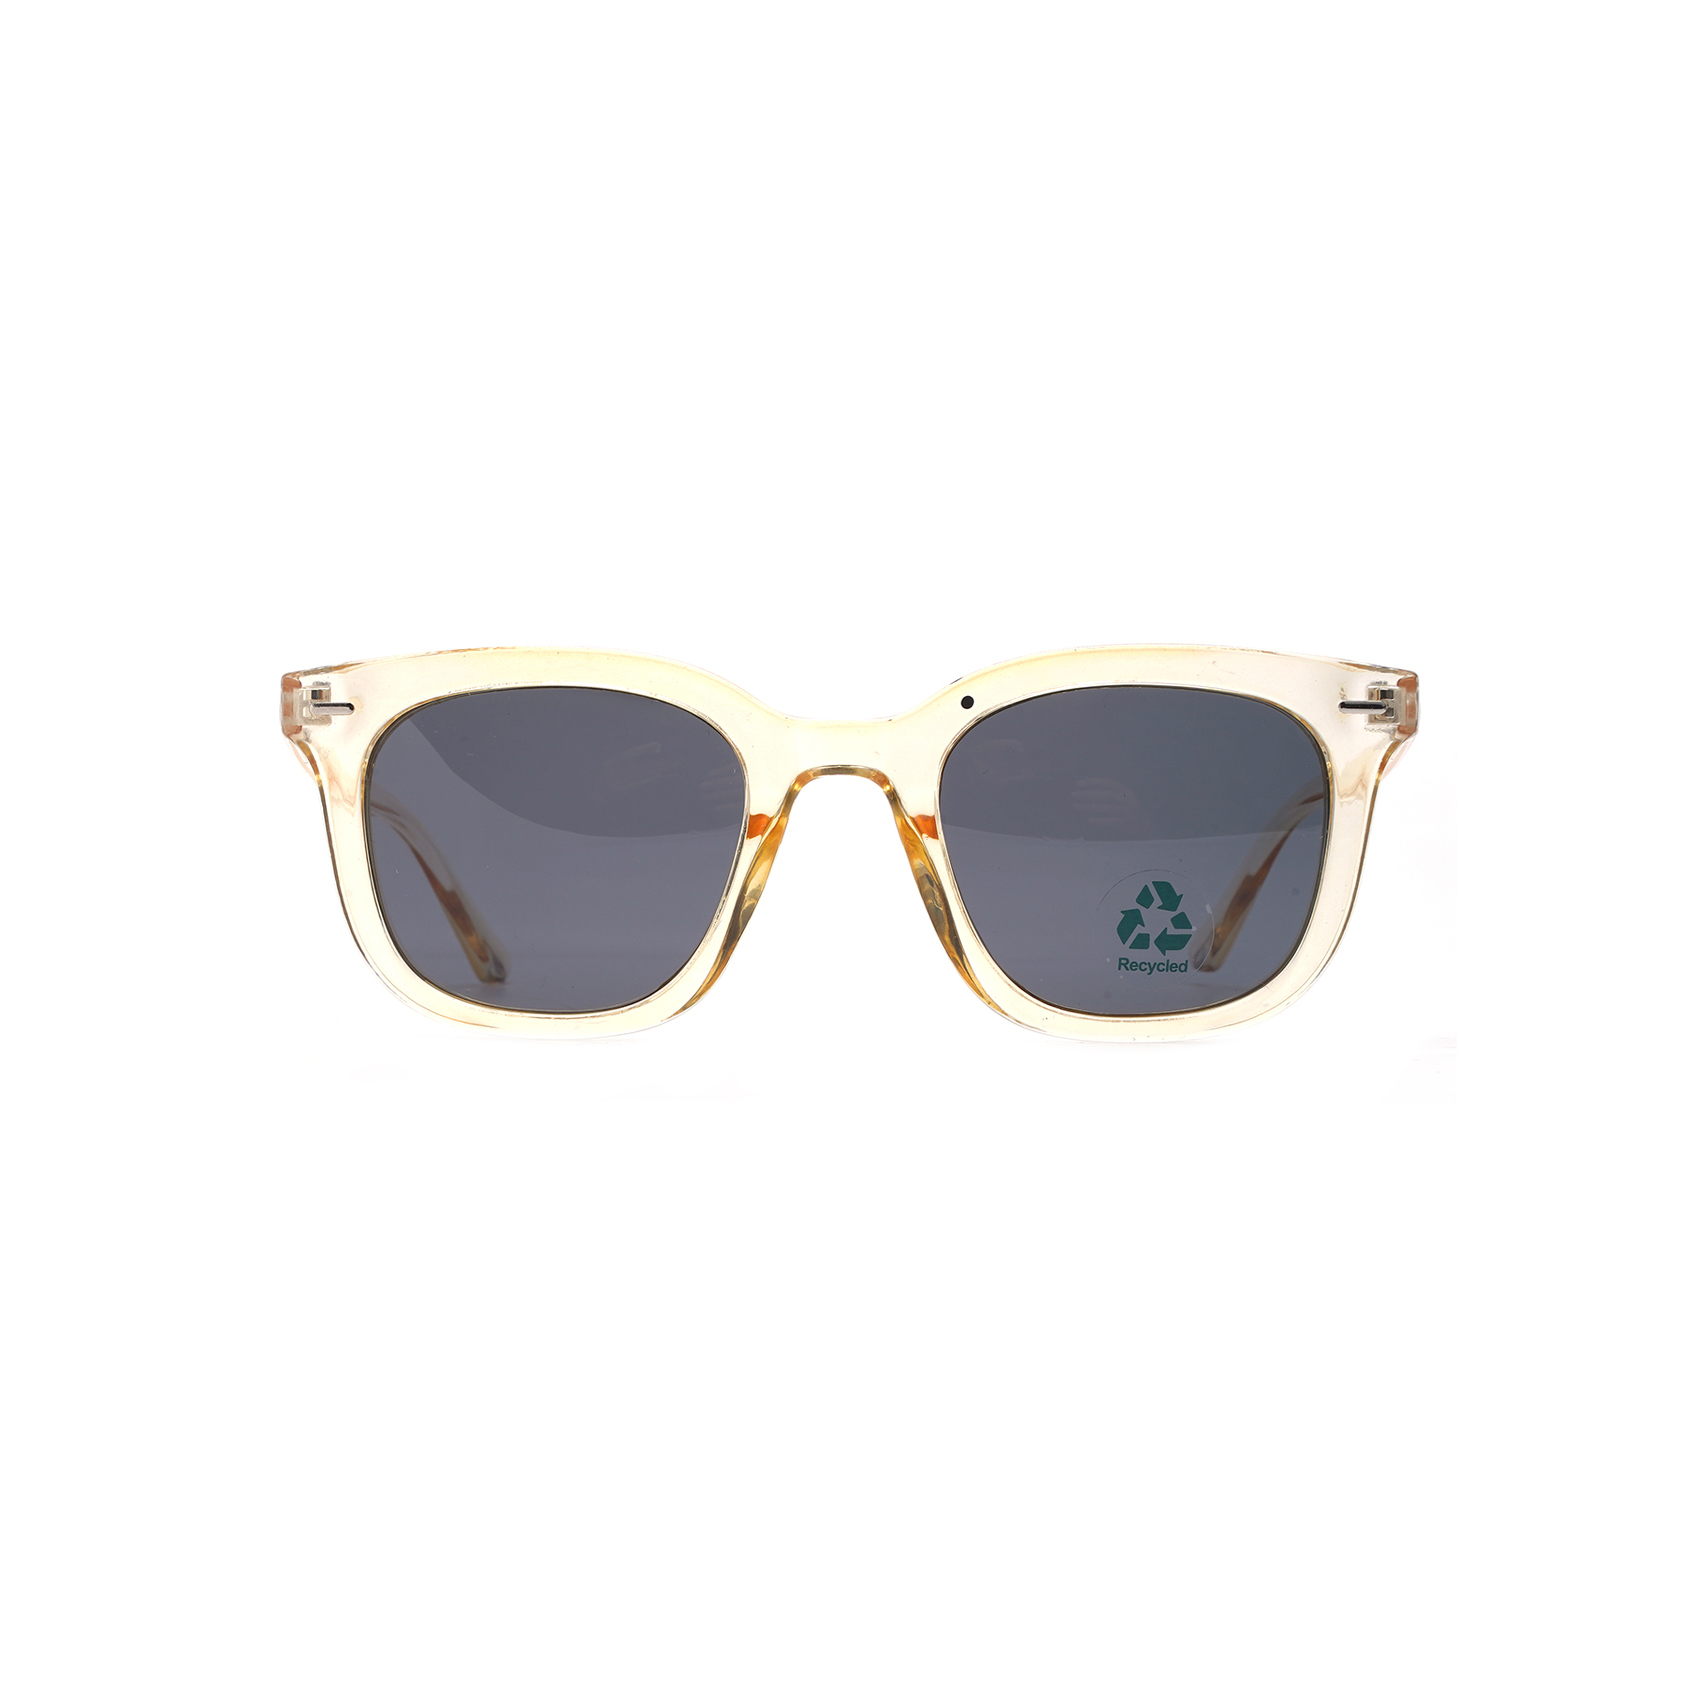 Exquisite Retro Squared Chunky Square Sunglasses Recycled Plastic Sunglasses